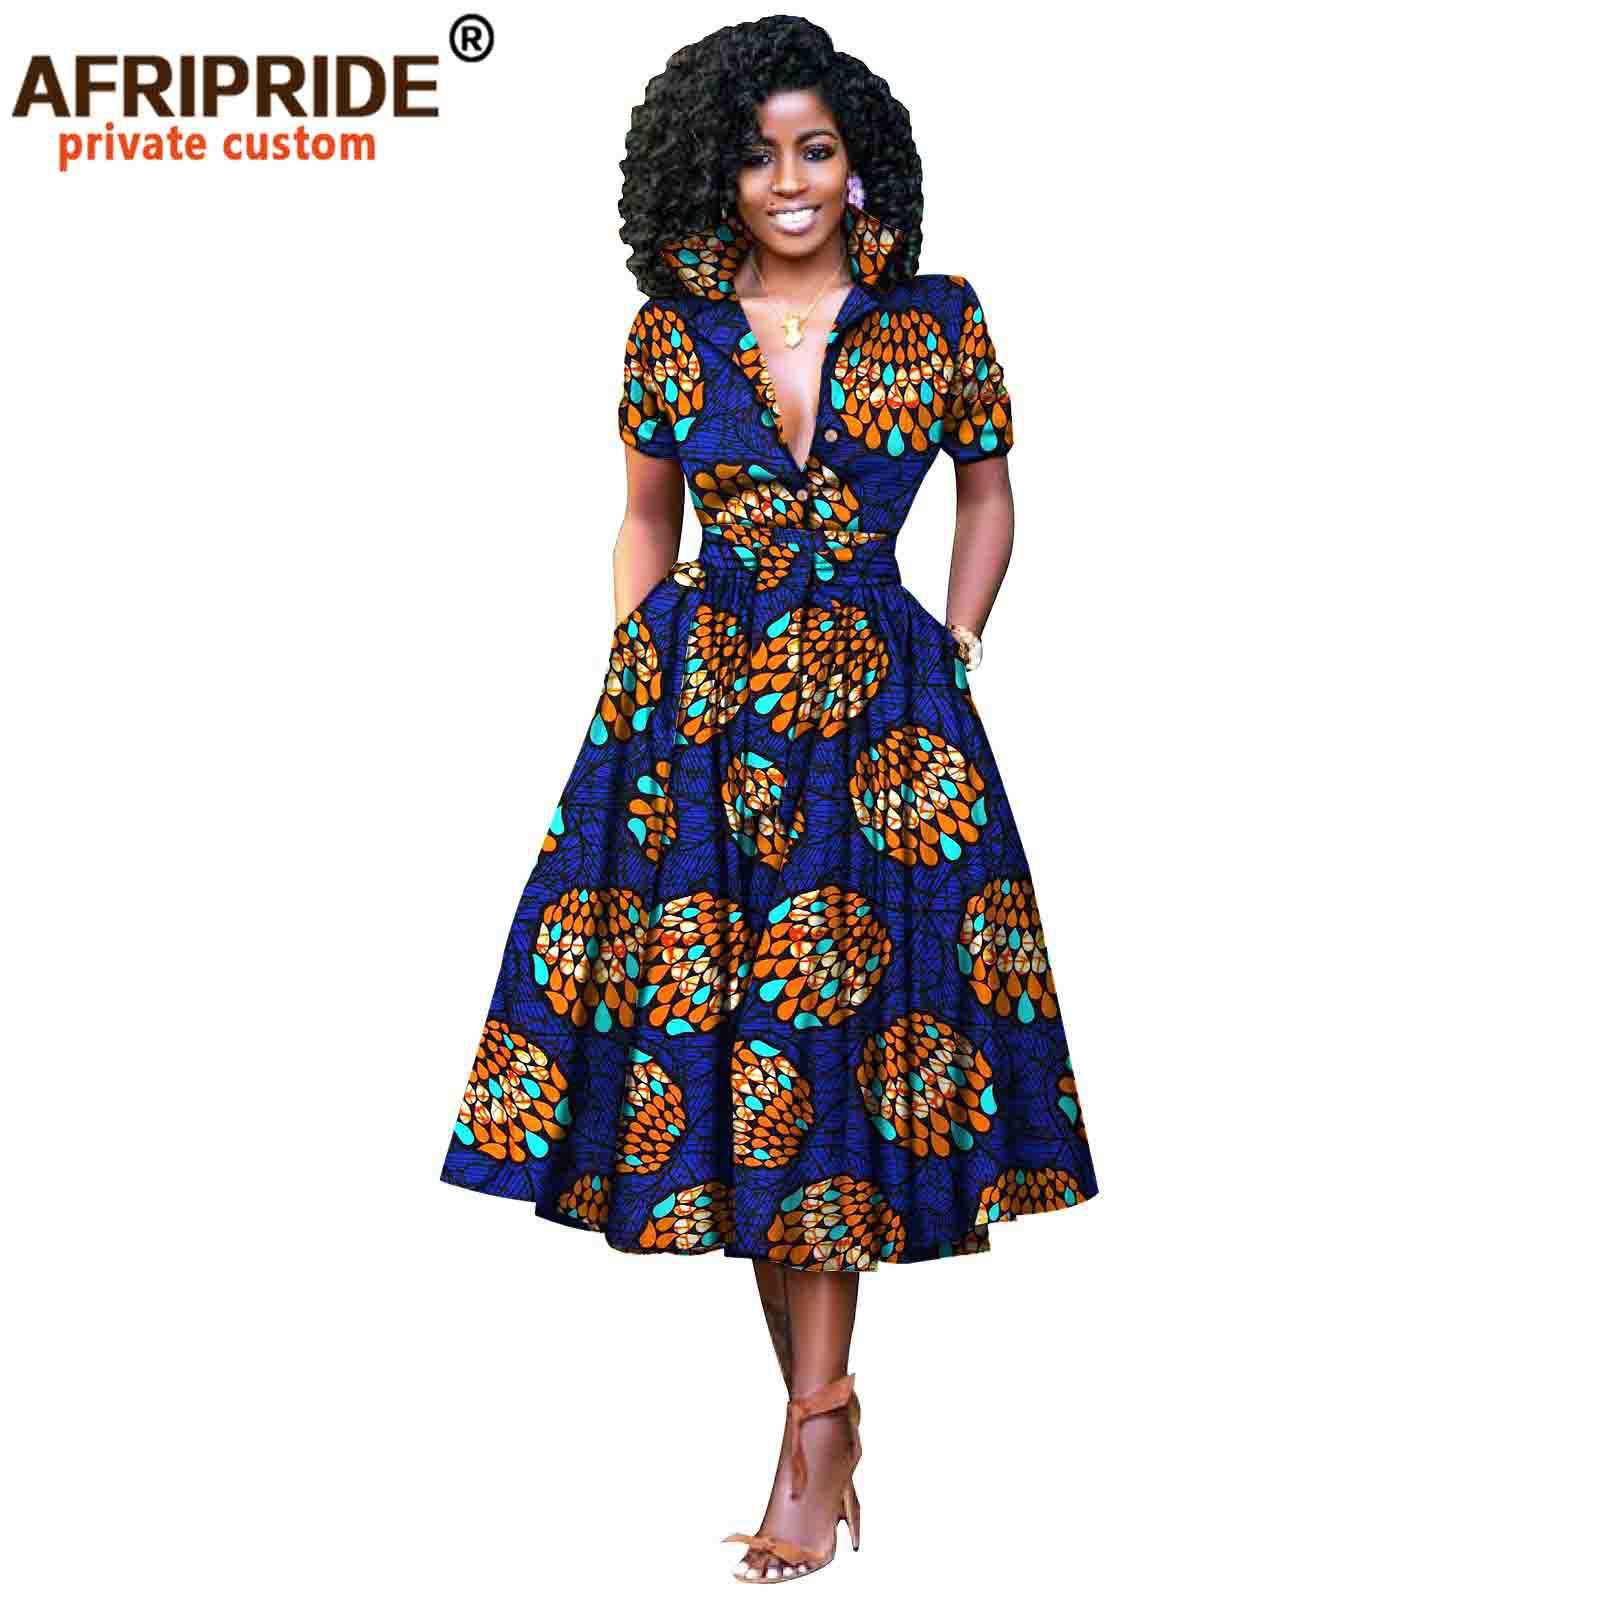 New African Ethnic Print Batik Women's V-neck plus Size Fashion Dress Afripride S2025072